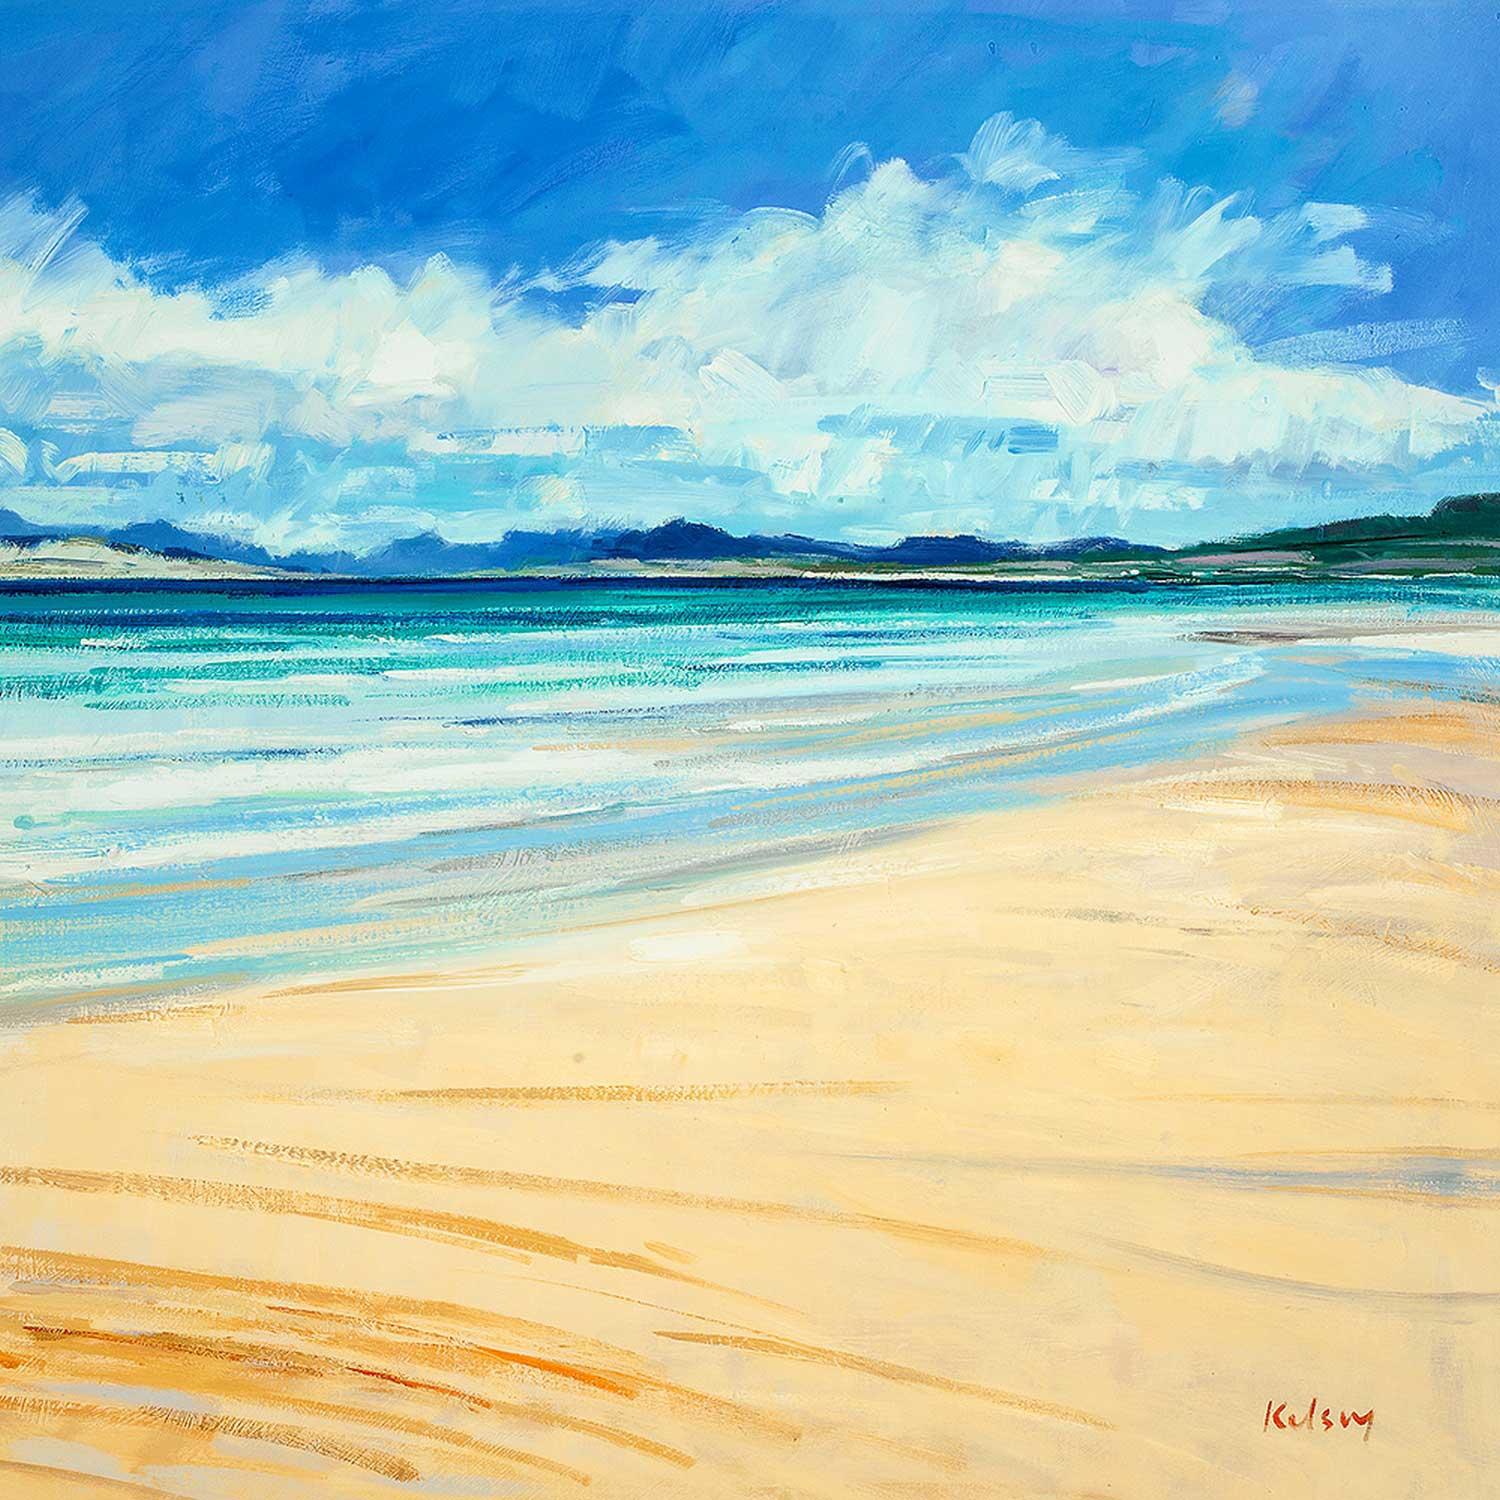 Deserted Beach Harris by artist Robert Kelsey